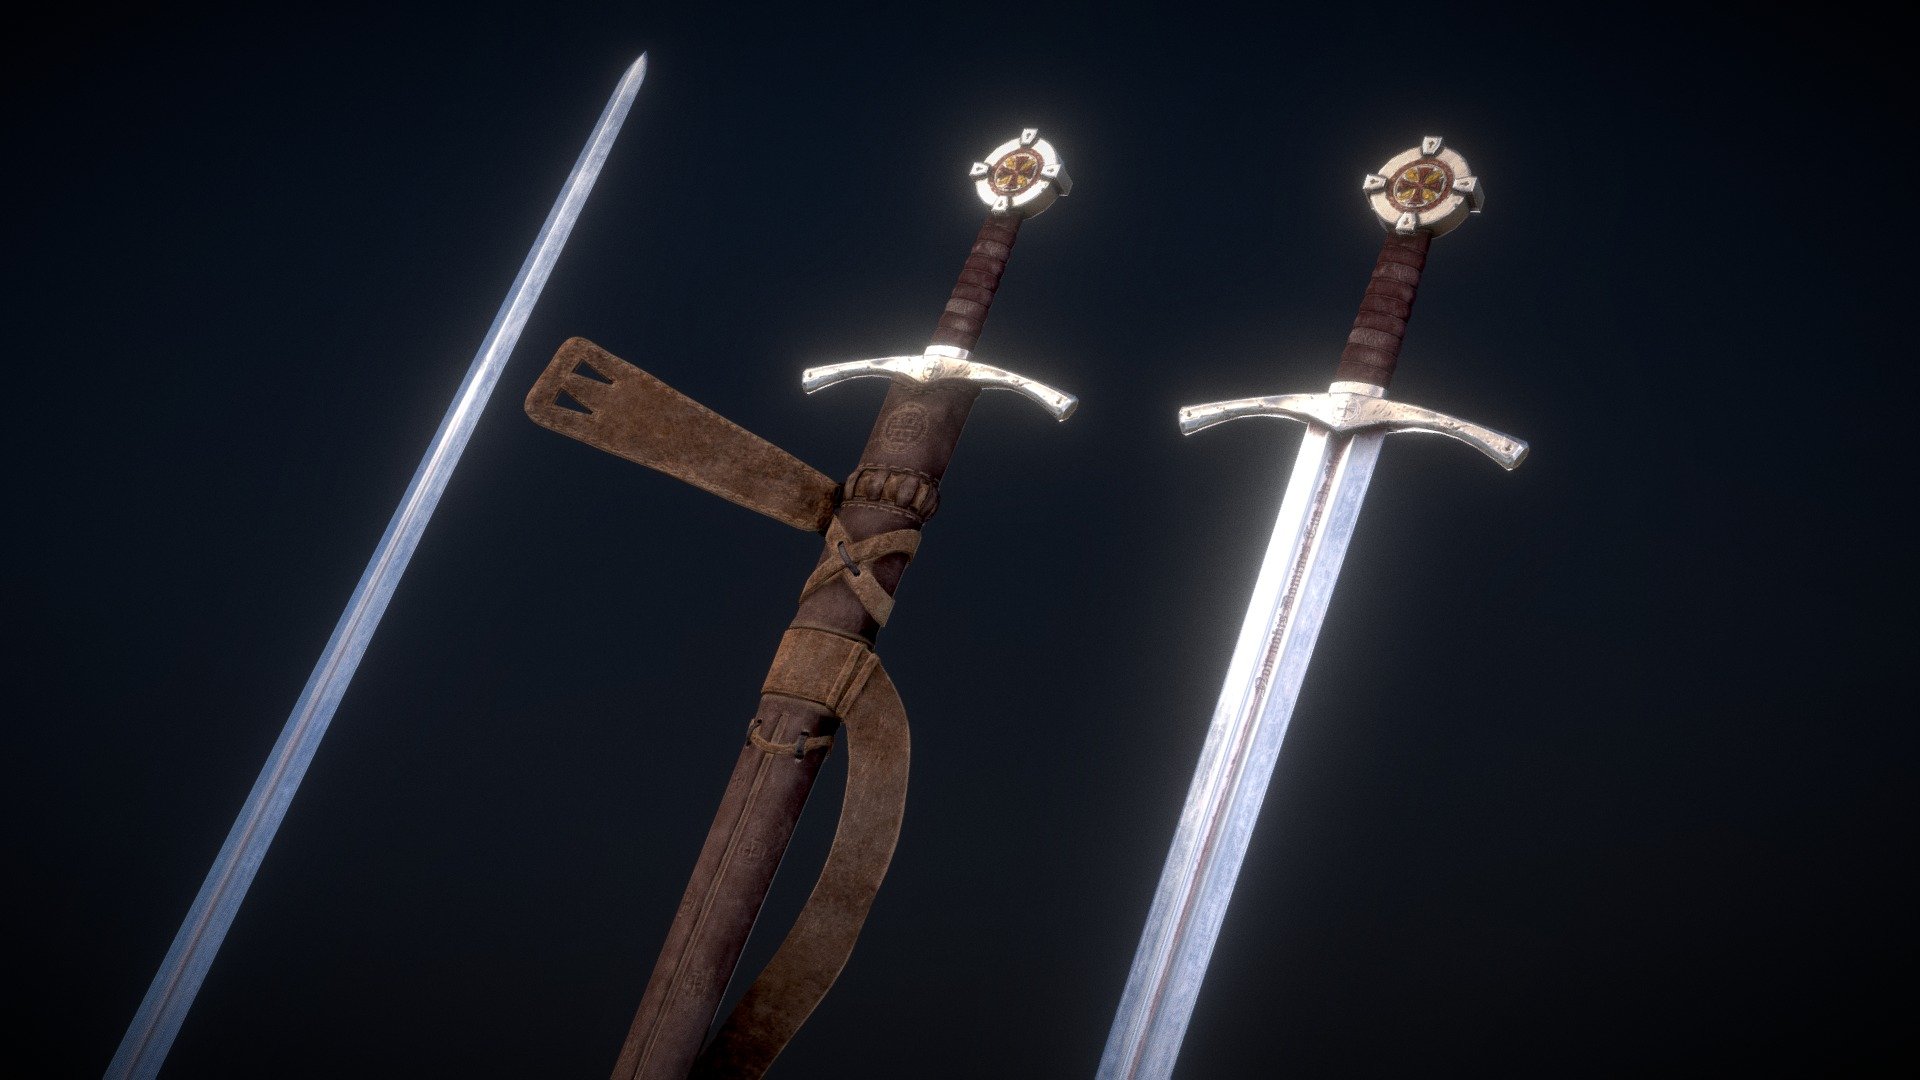 Lp sword created for UE4 - Sword templar - 3D model by Sergey Sobin (@slm_crynet) 3d model